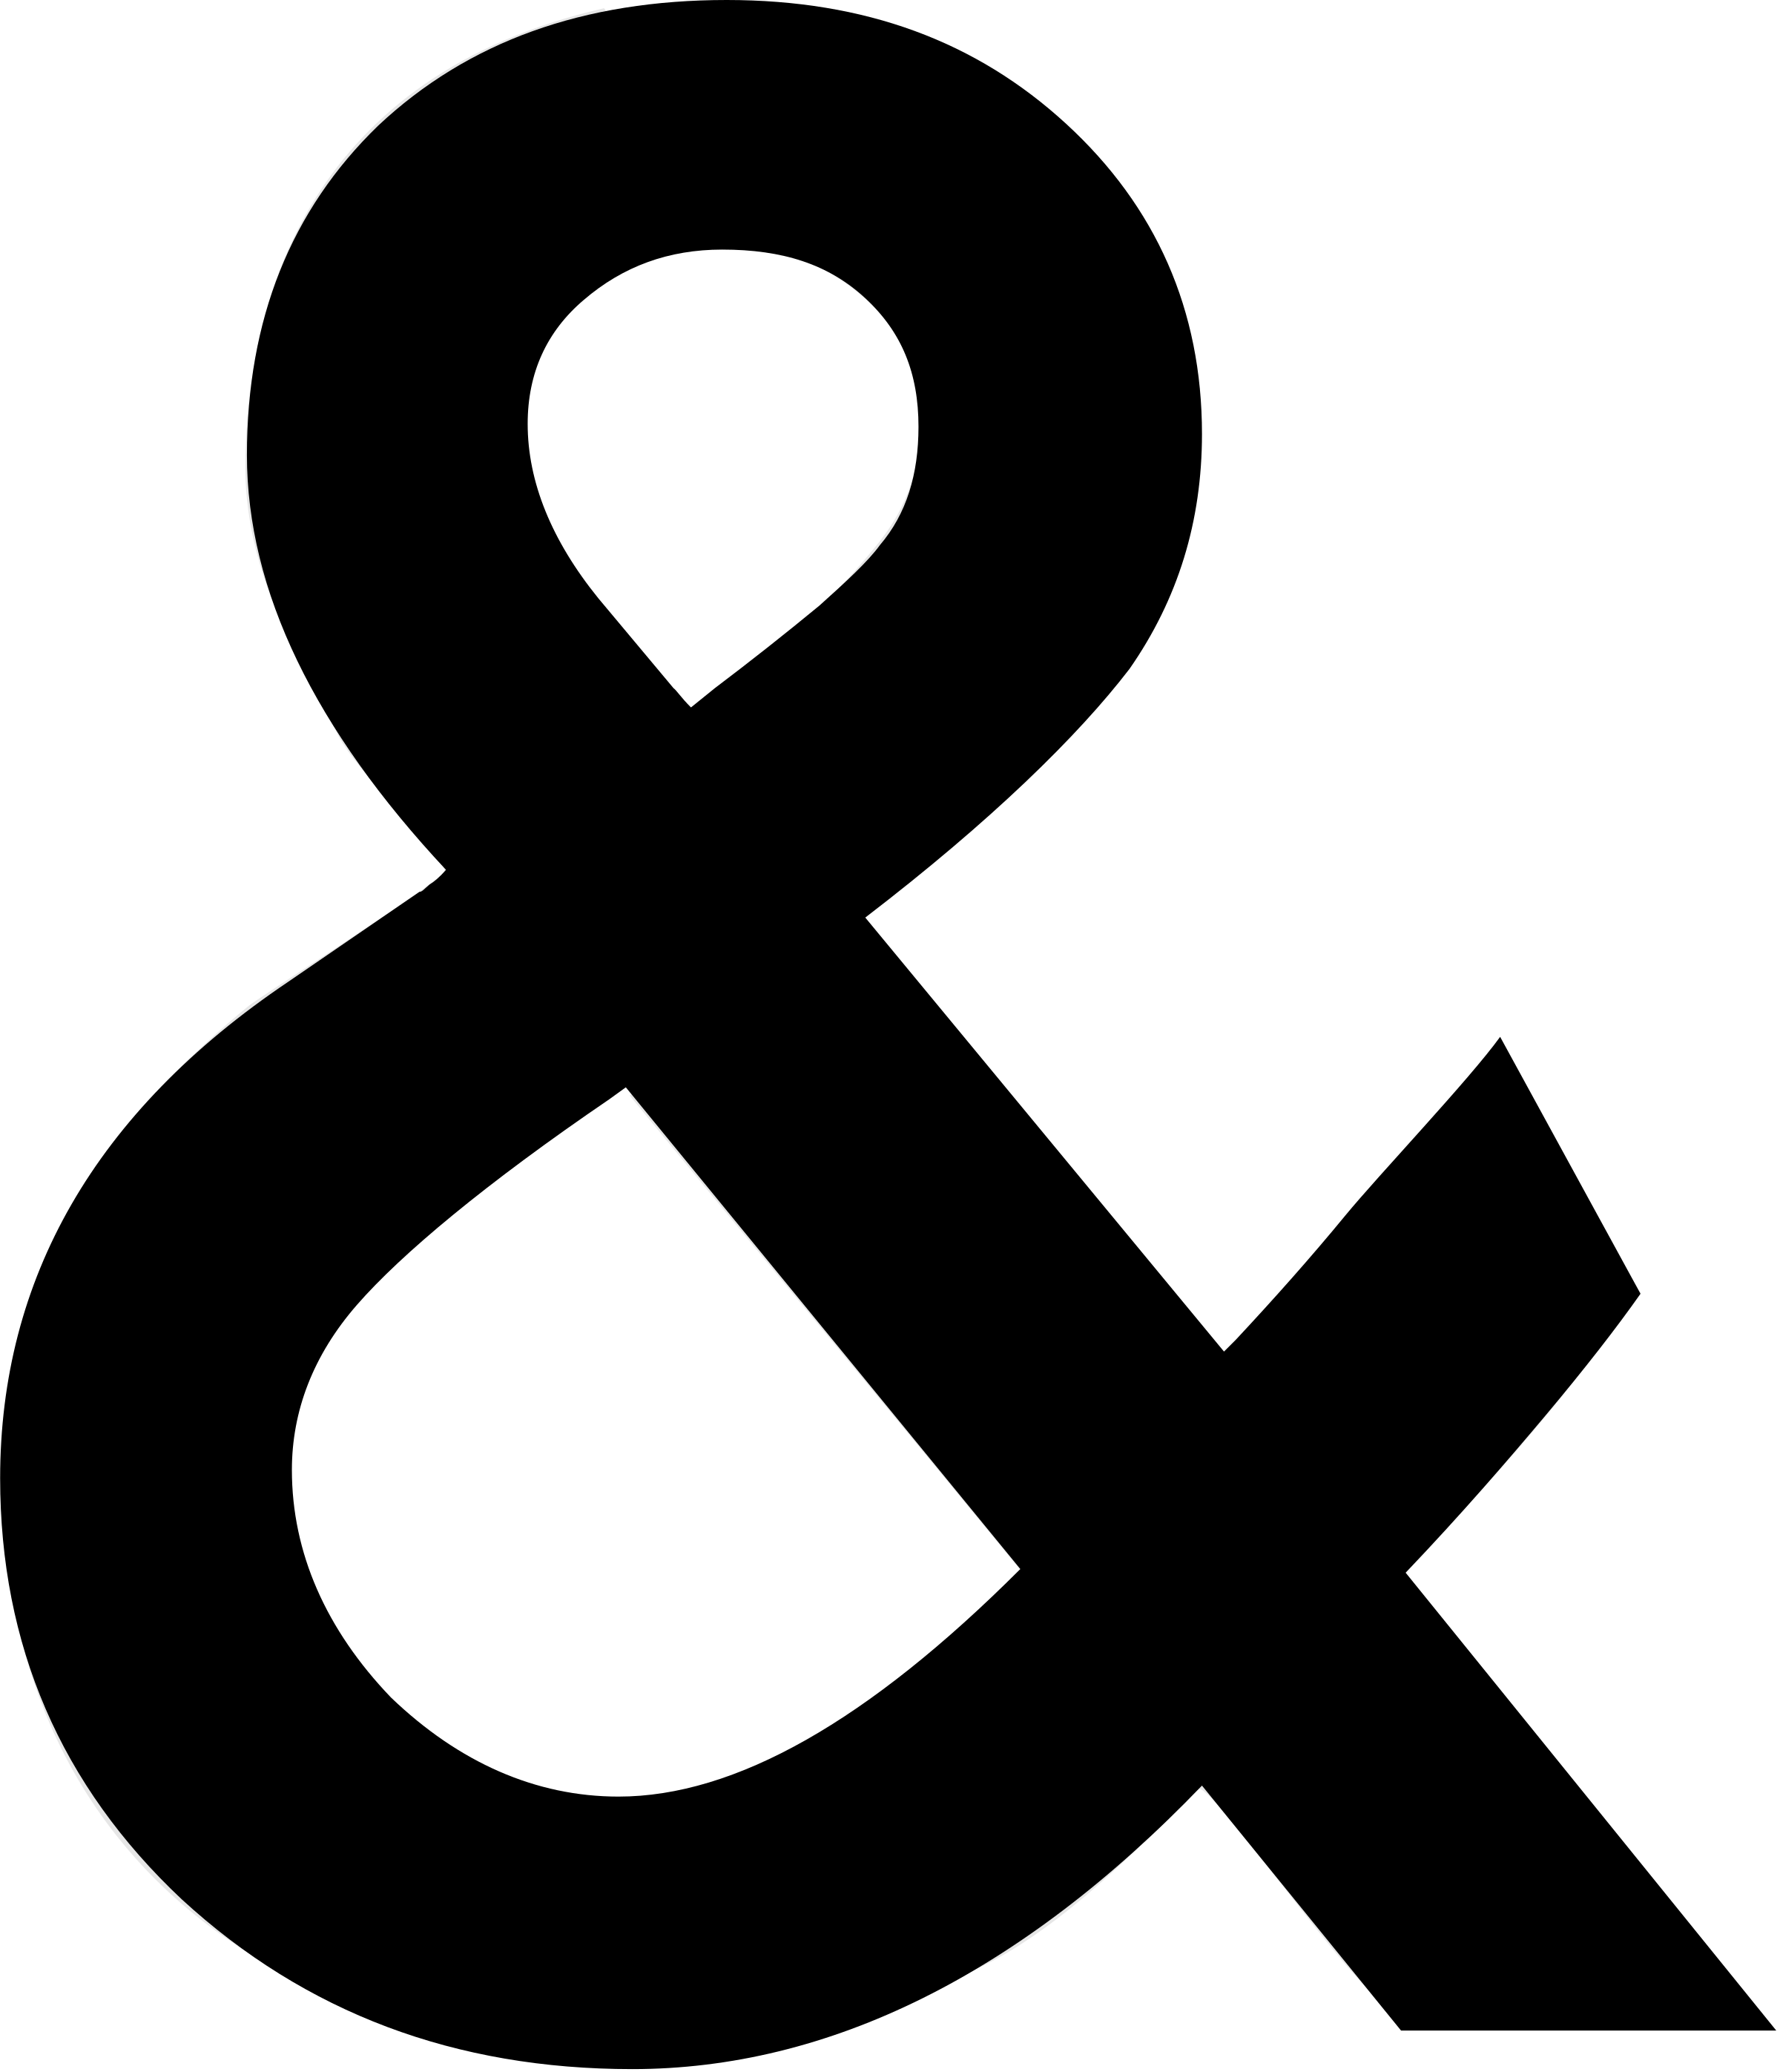 Ampersand Logo Black And Ahite - Ampersand Logos (2400x2793)